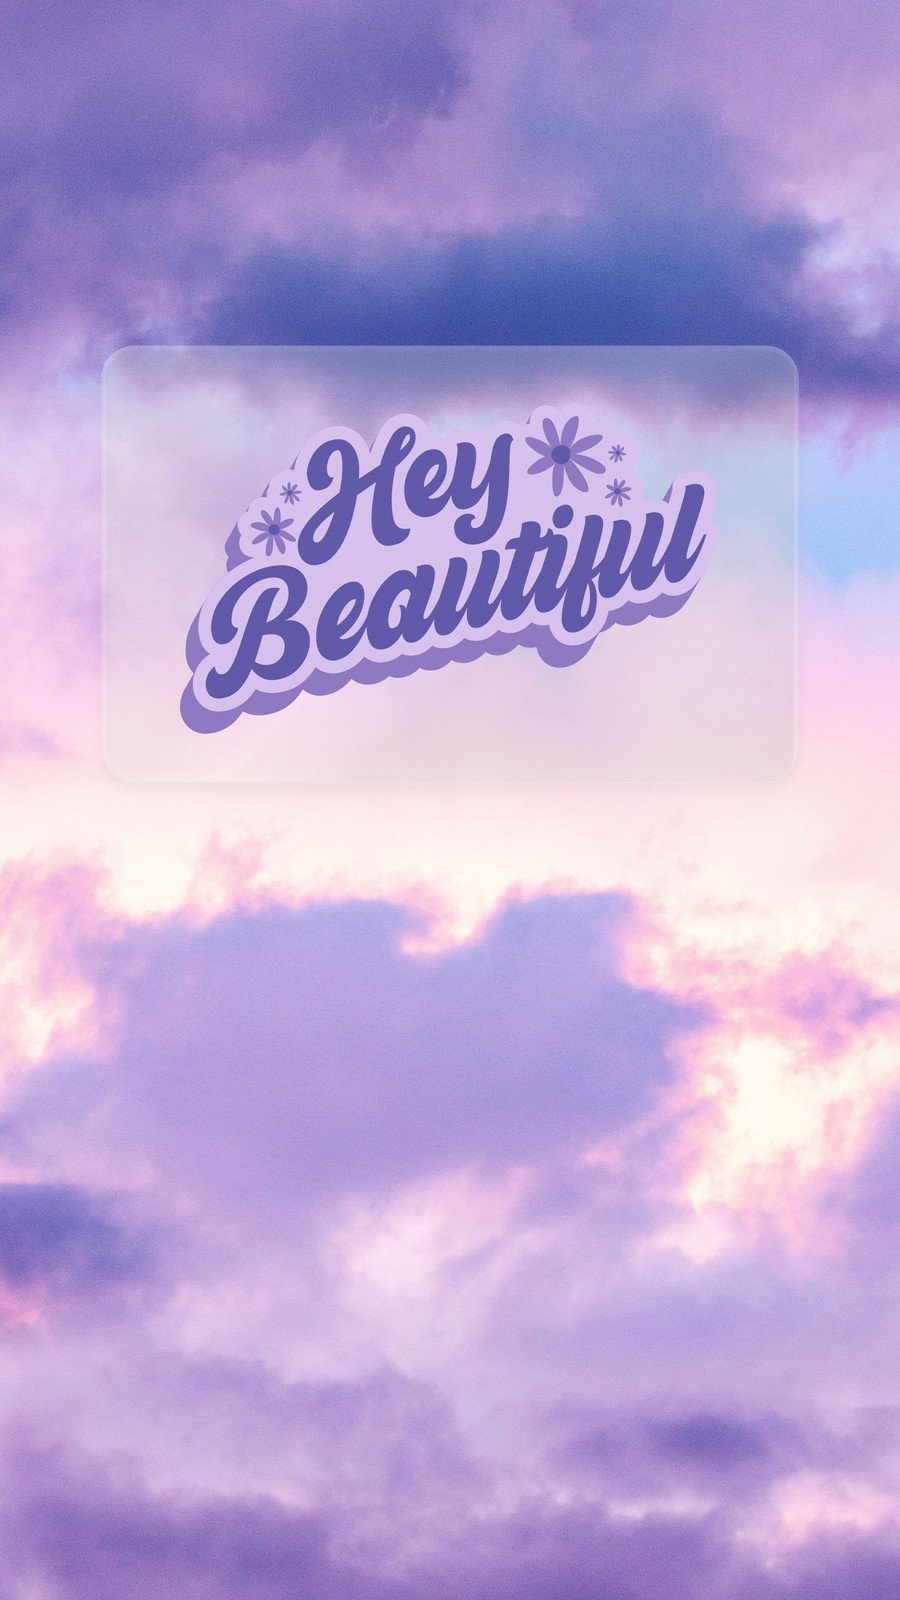 Hello beautiful - aesthetic Wallpaper Download